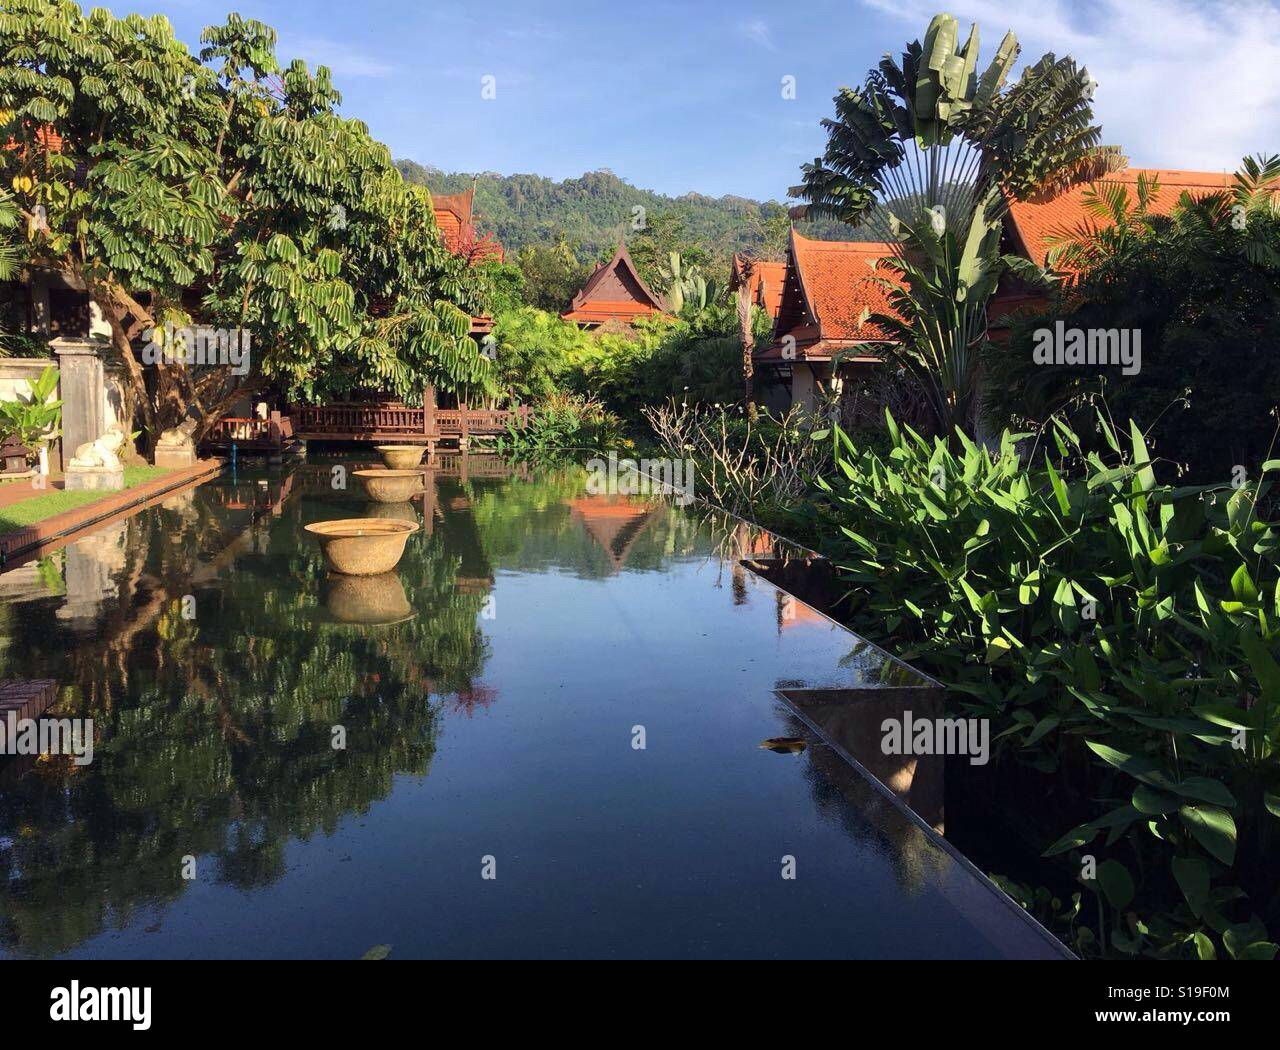 A resort in Khao Lak, Thailand Stock Photo